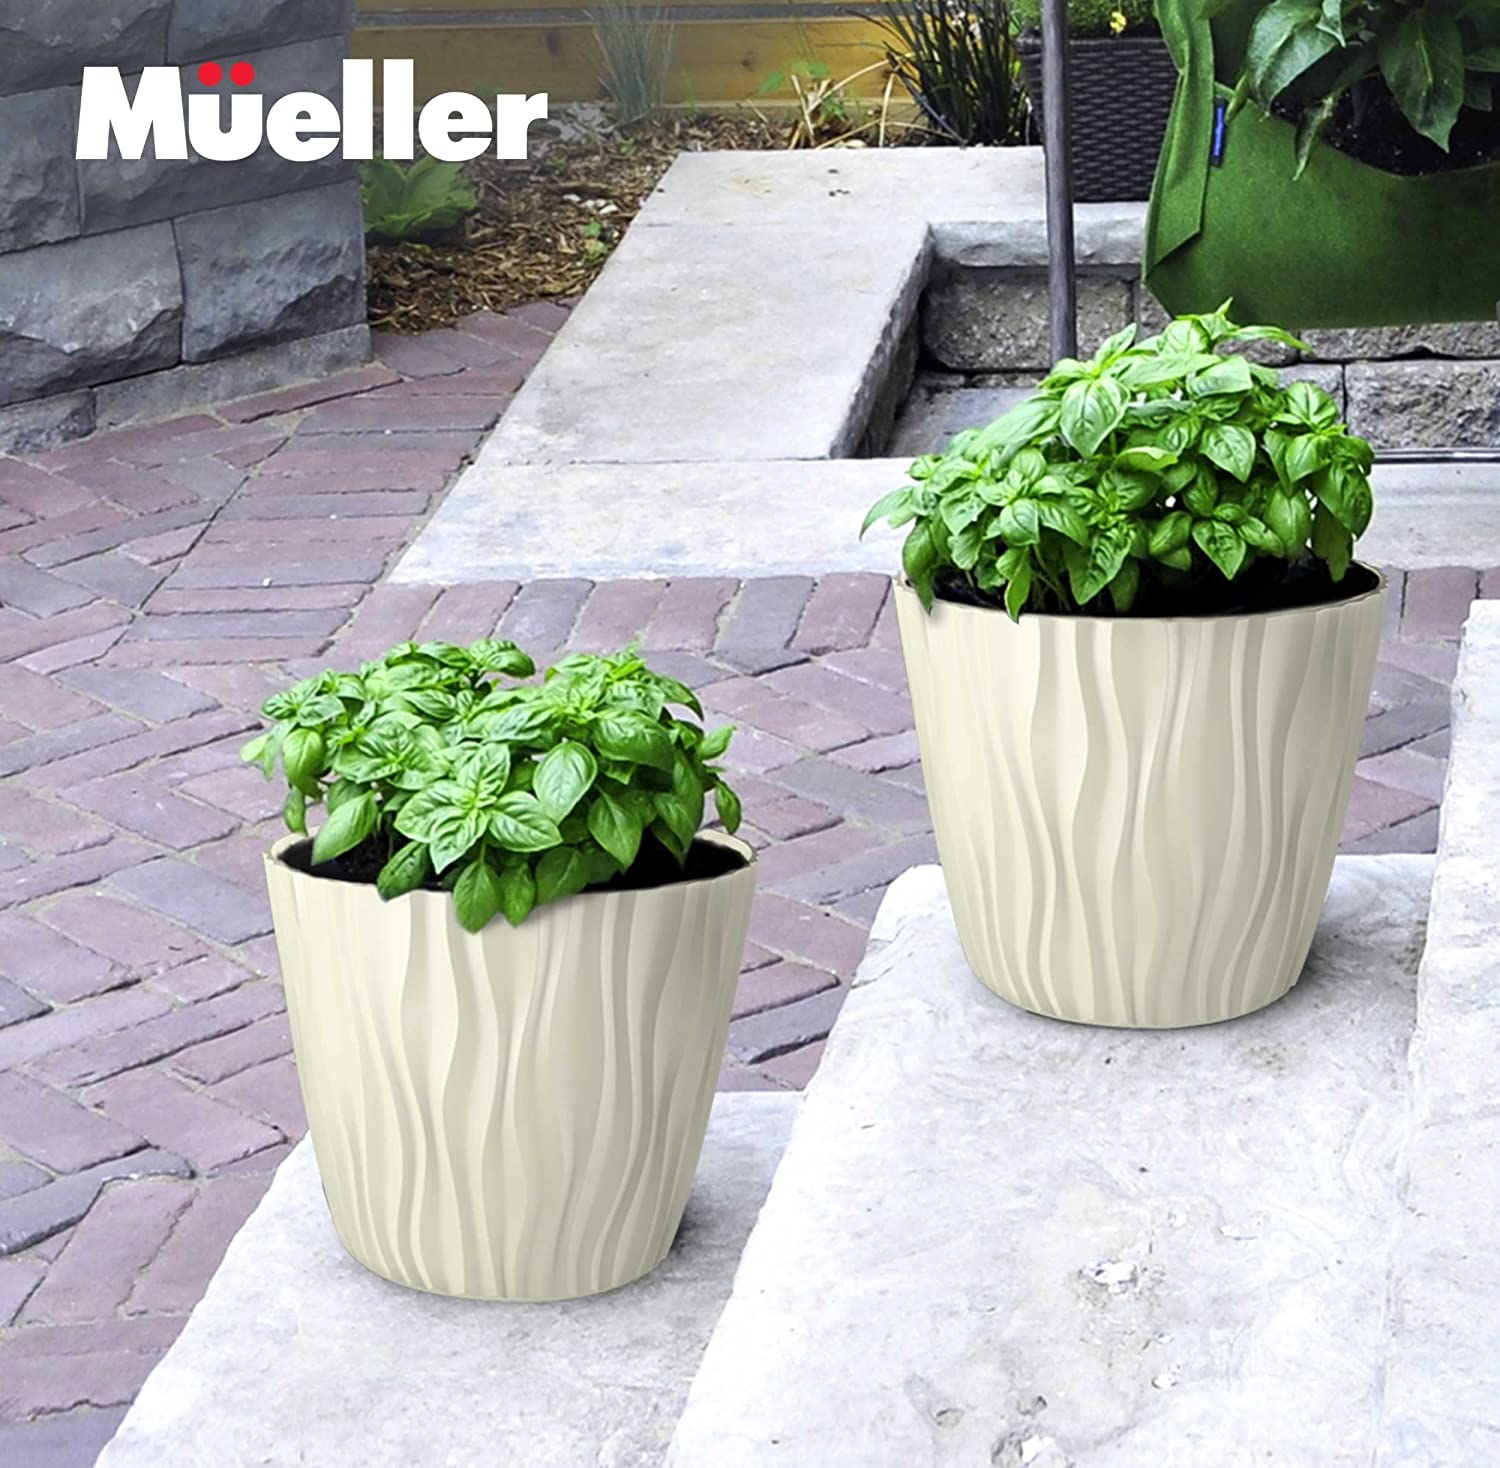 muellerhome_Decorative-Plant-and-Flower-Pots-Small-2-Piece-Beige-Set-7